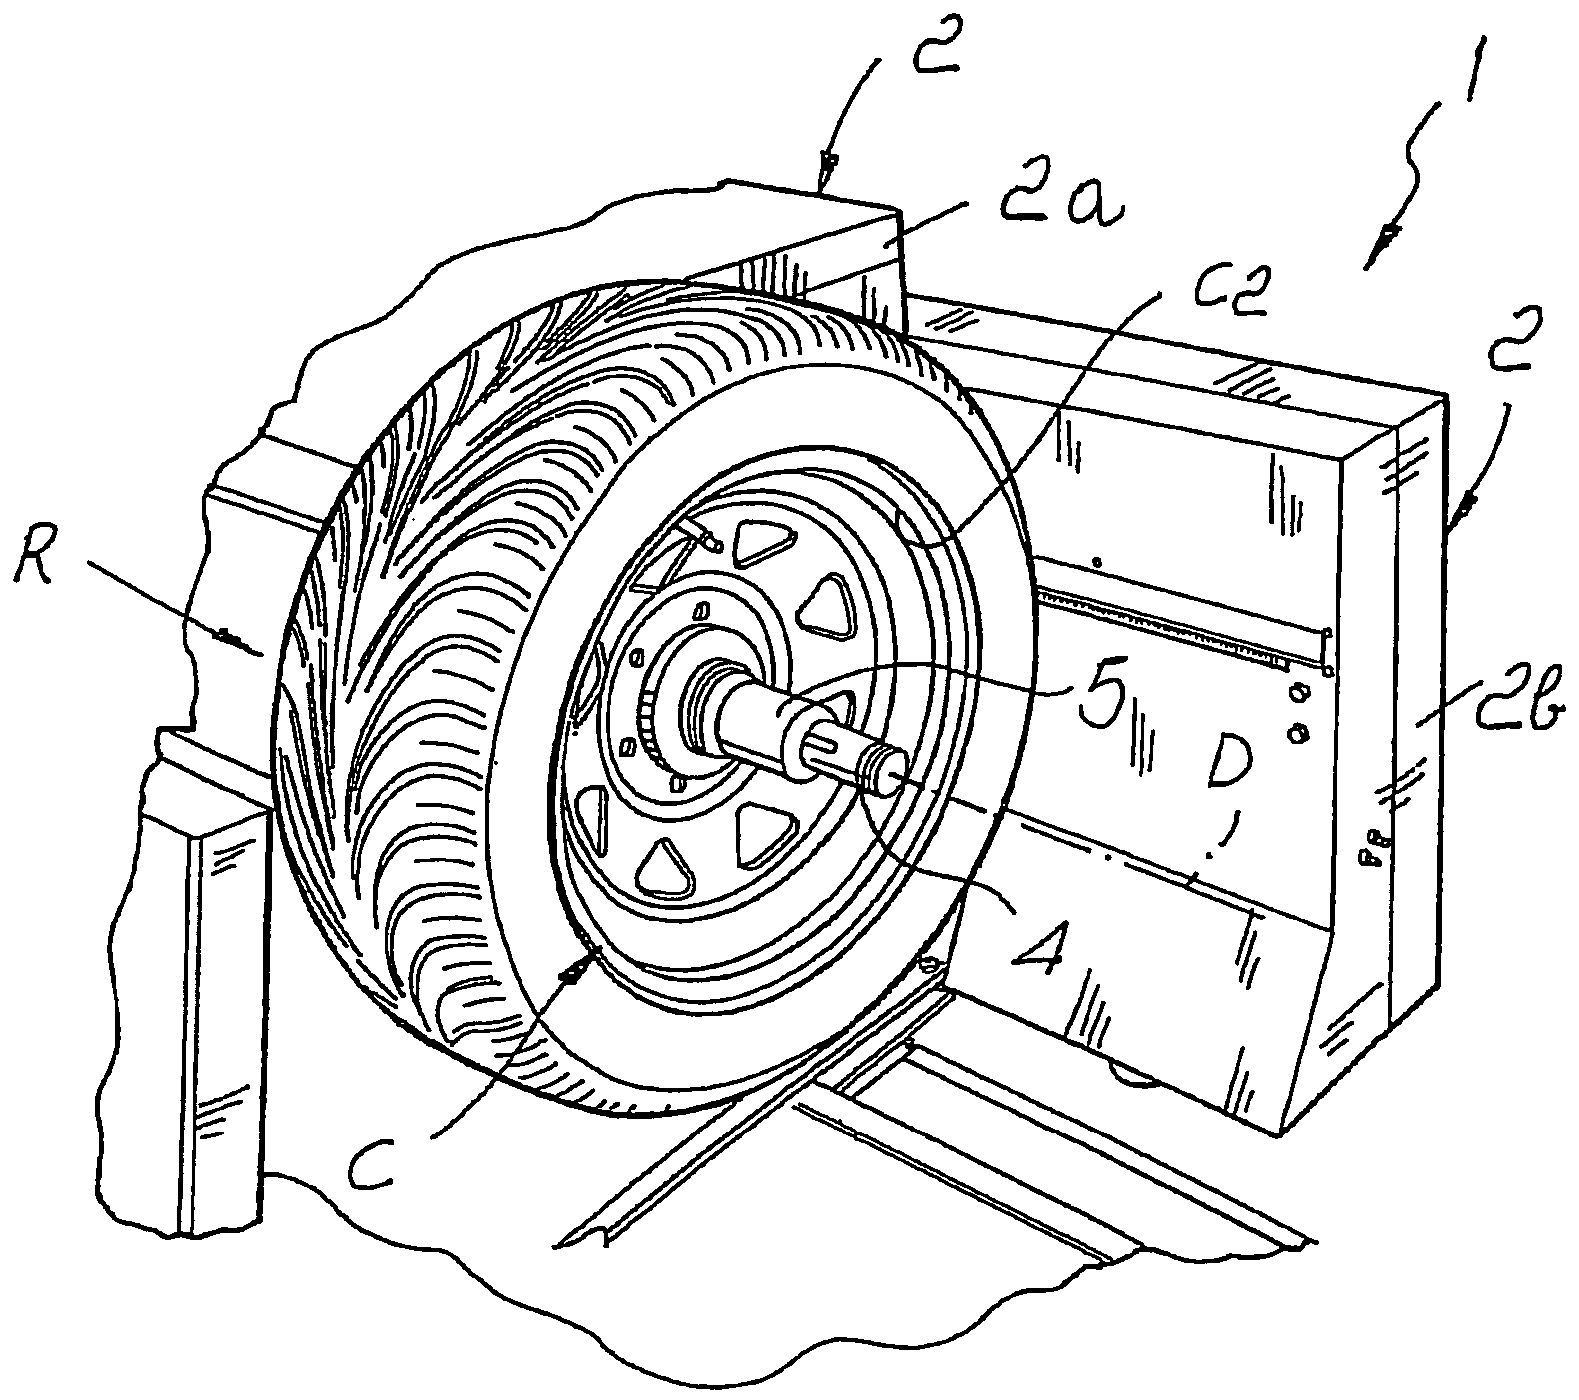 Machine for balancing vehicle wheels